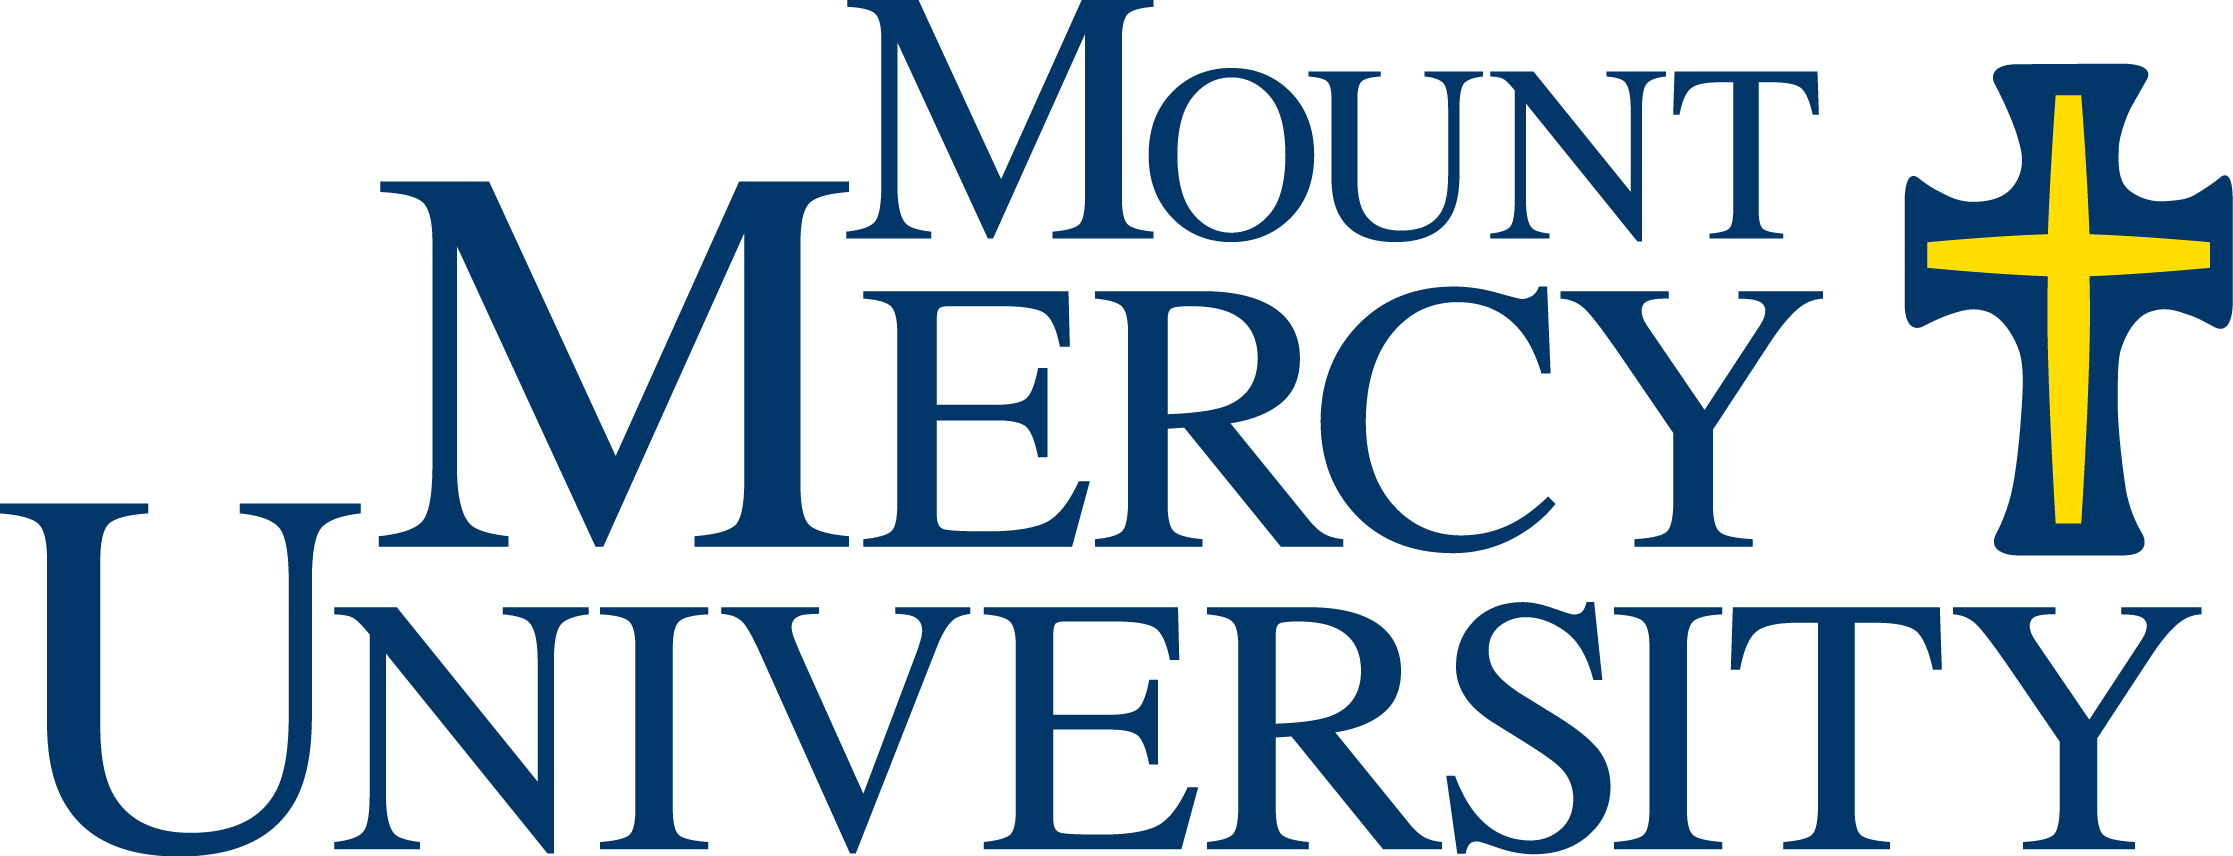 mmu-logo-s-2c.png